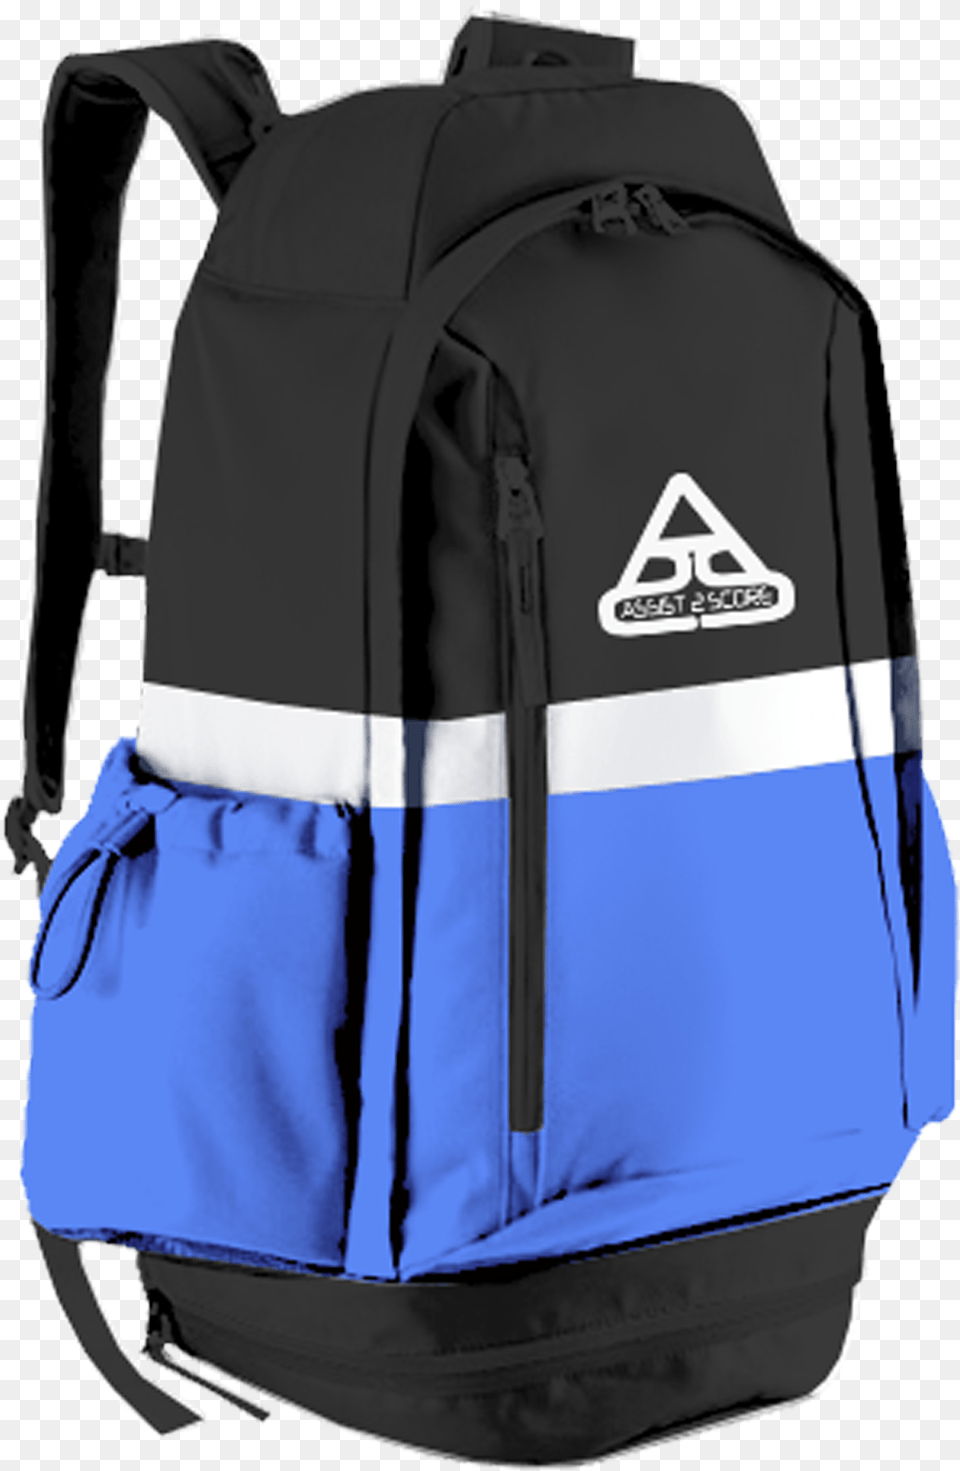 Acc Bookbg Sub 01 Front Nike Kd Fastbreak Backpack Blackblackteam Orange, Bag Png